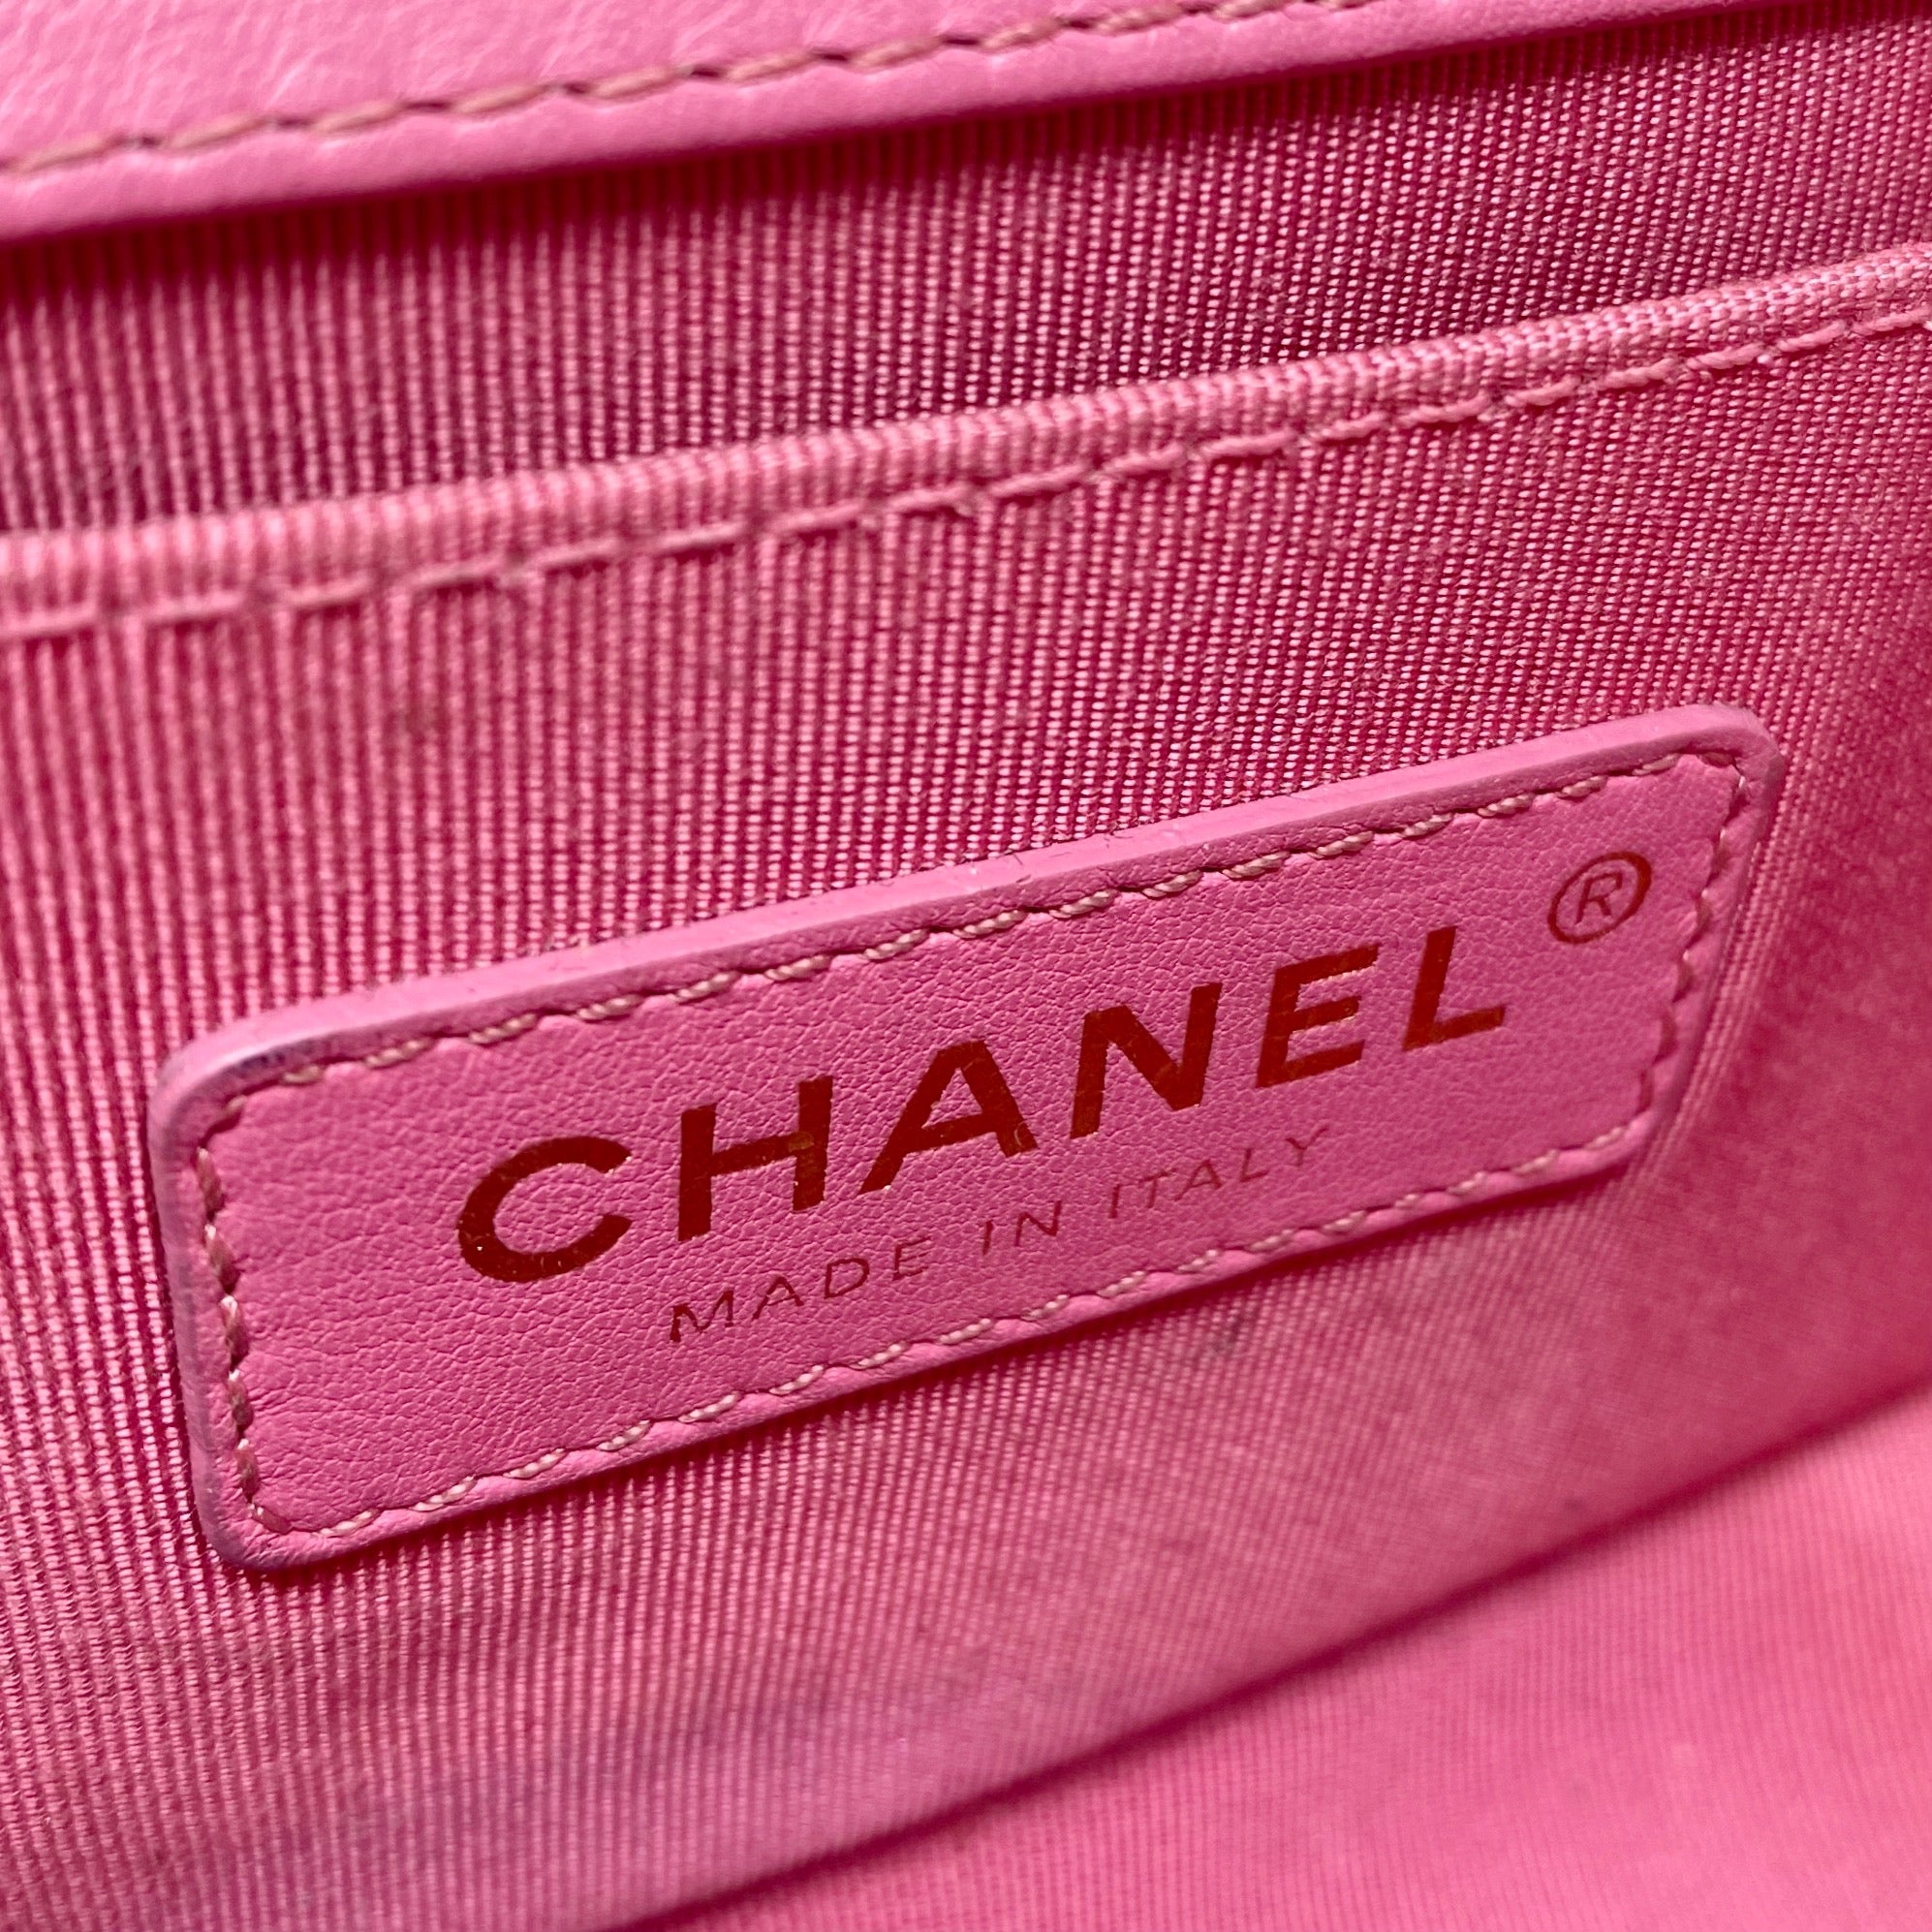 Chanel Pink Calfskin Small Boy Bag